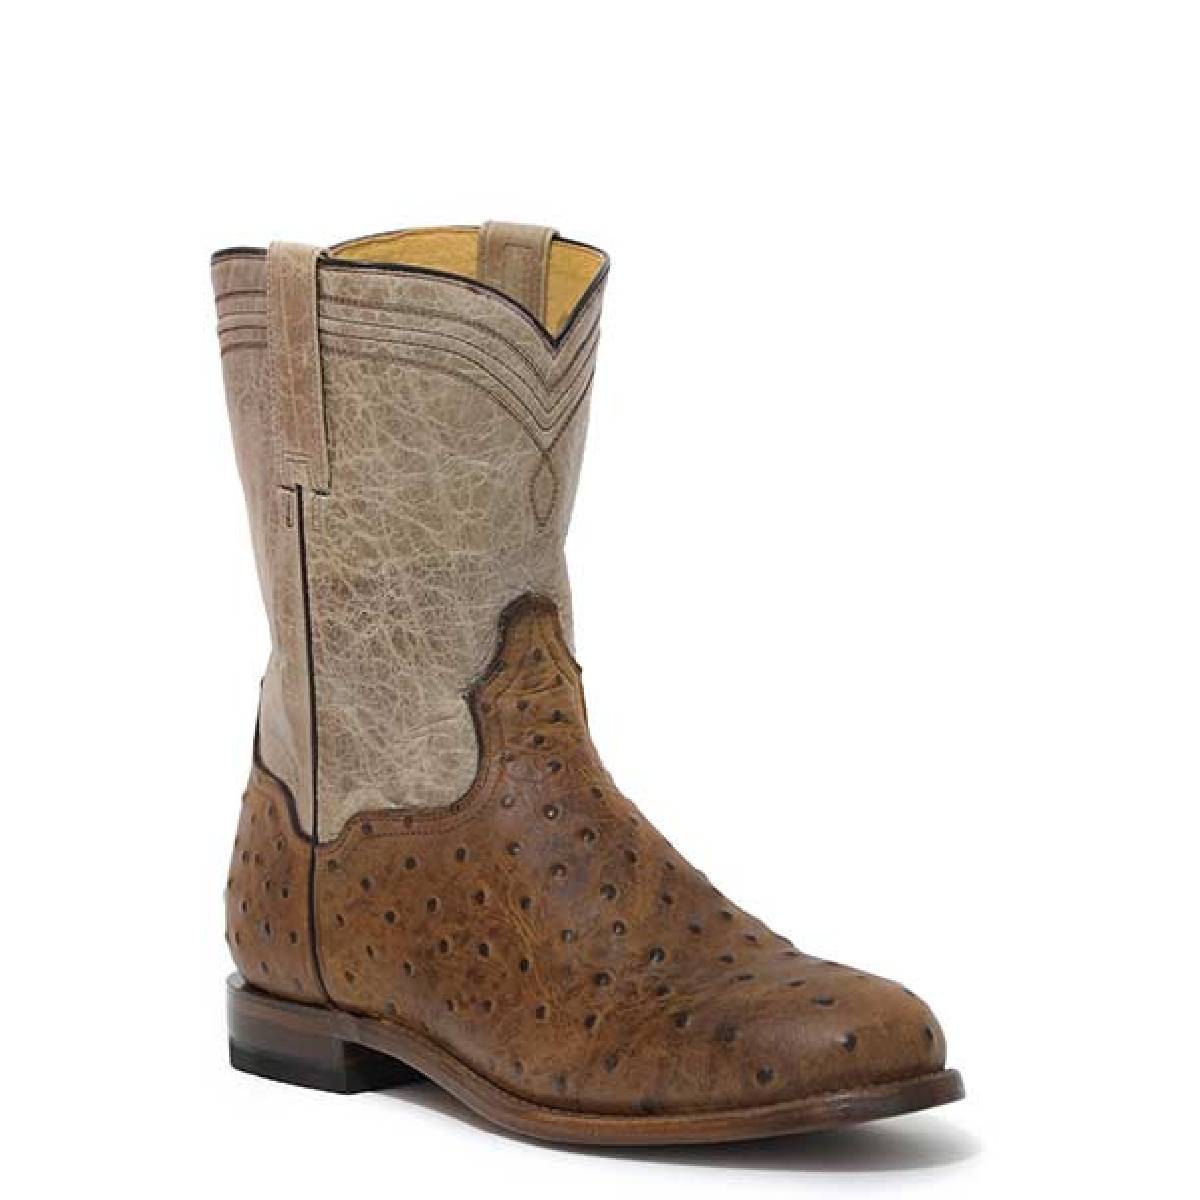 Men's Roper Roderick Ostrich Print GEO Sole Boots Handcrafted Tan - yeehawcowboy